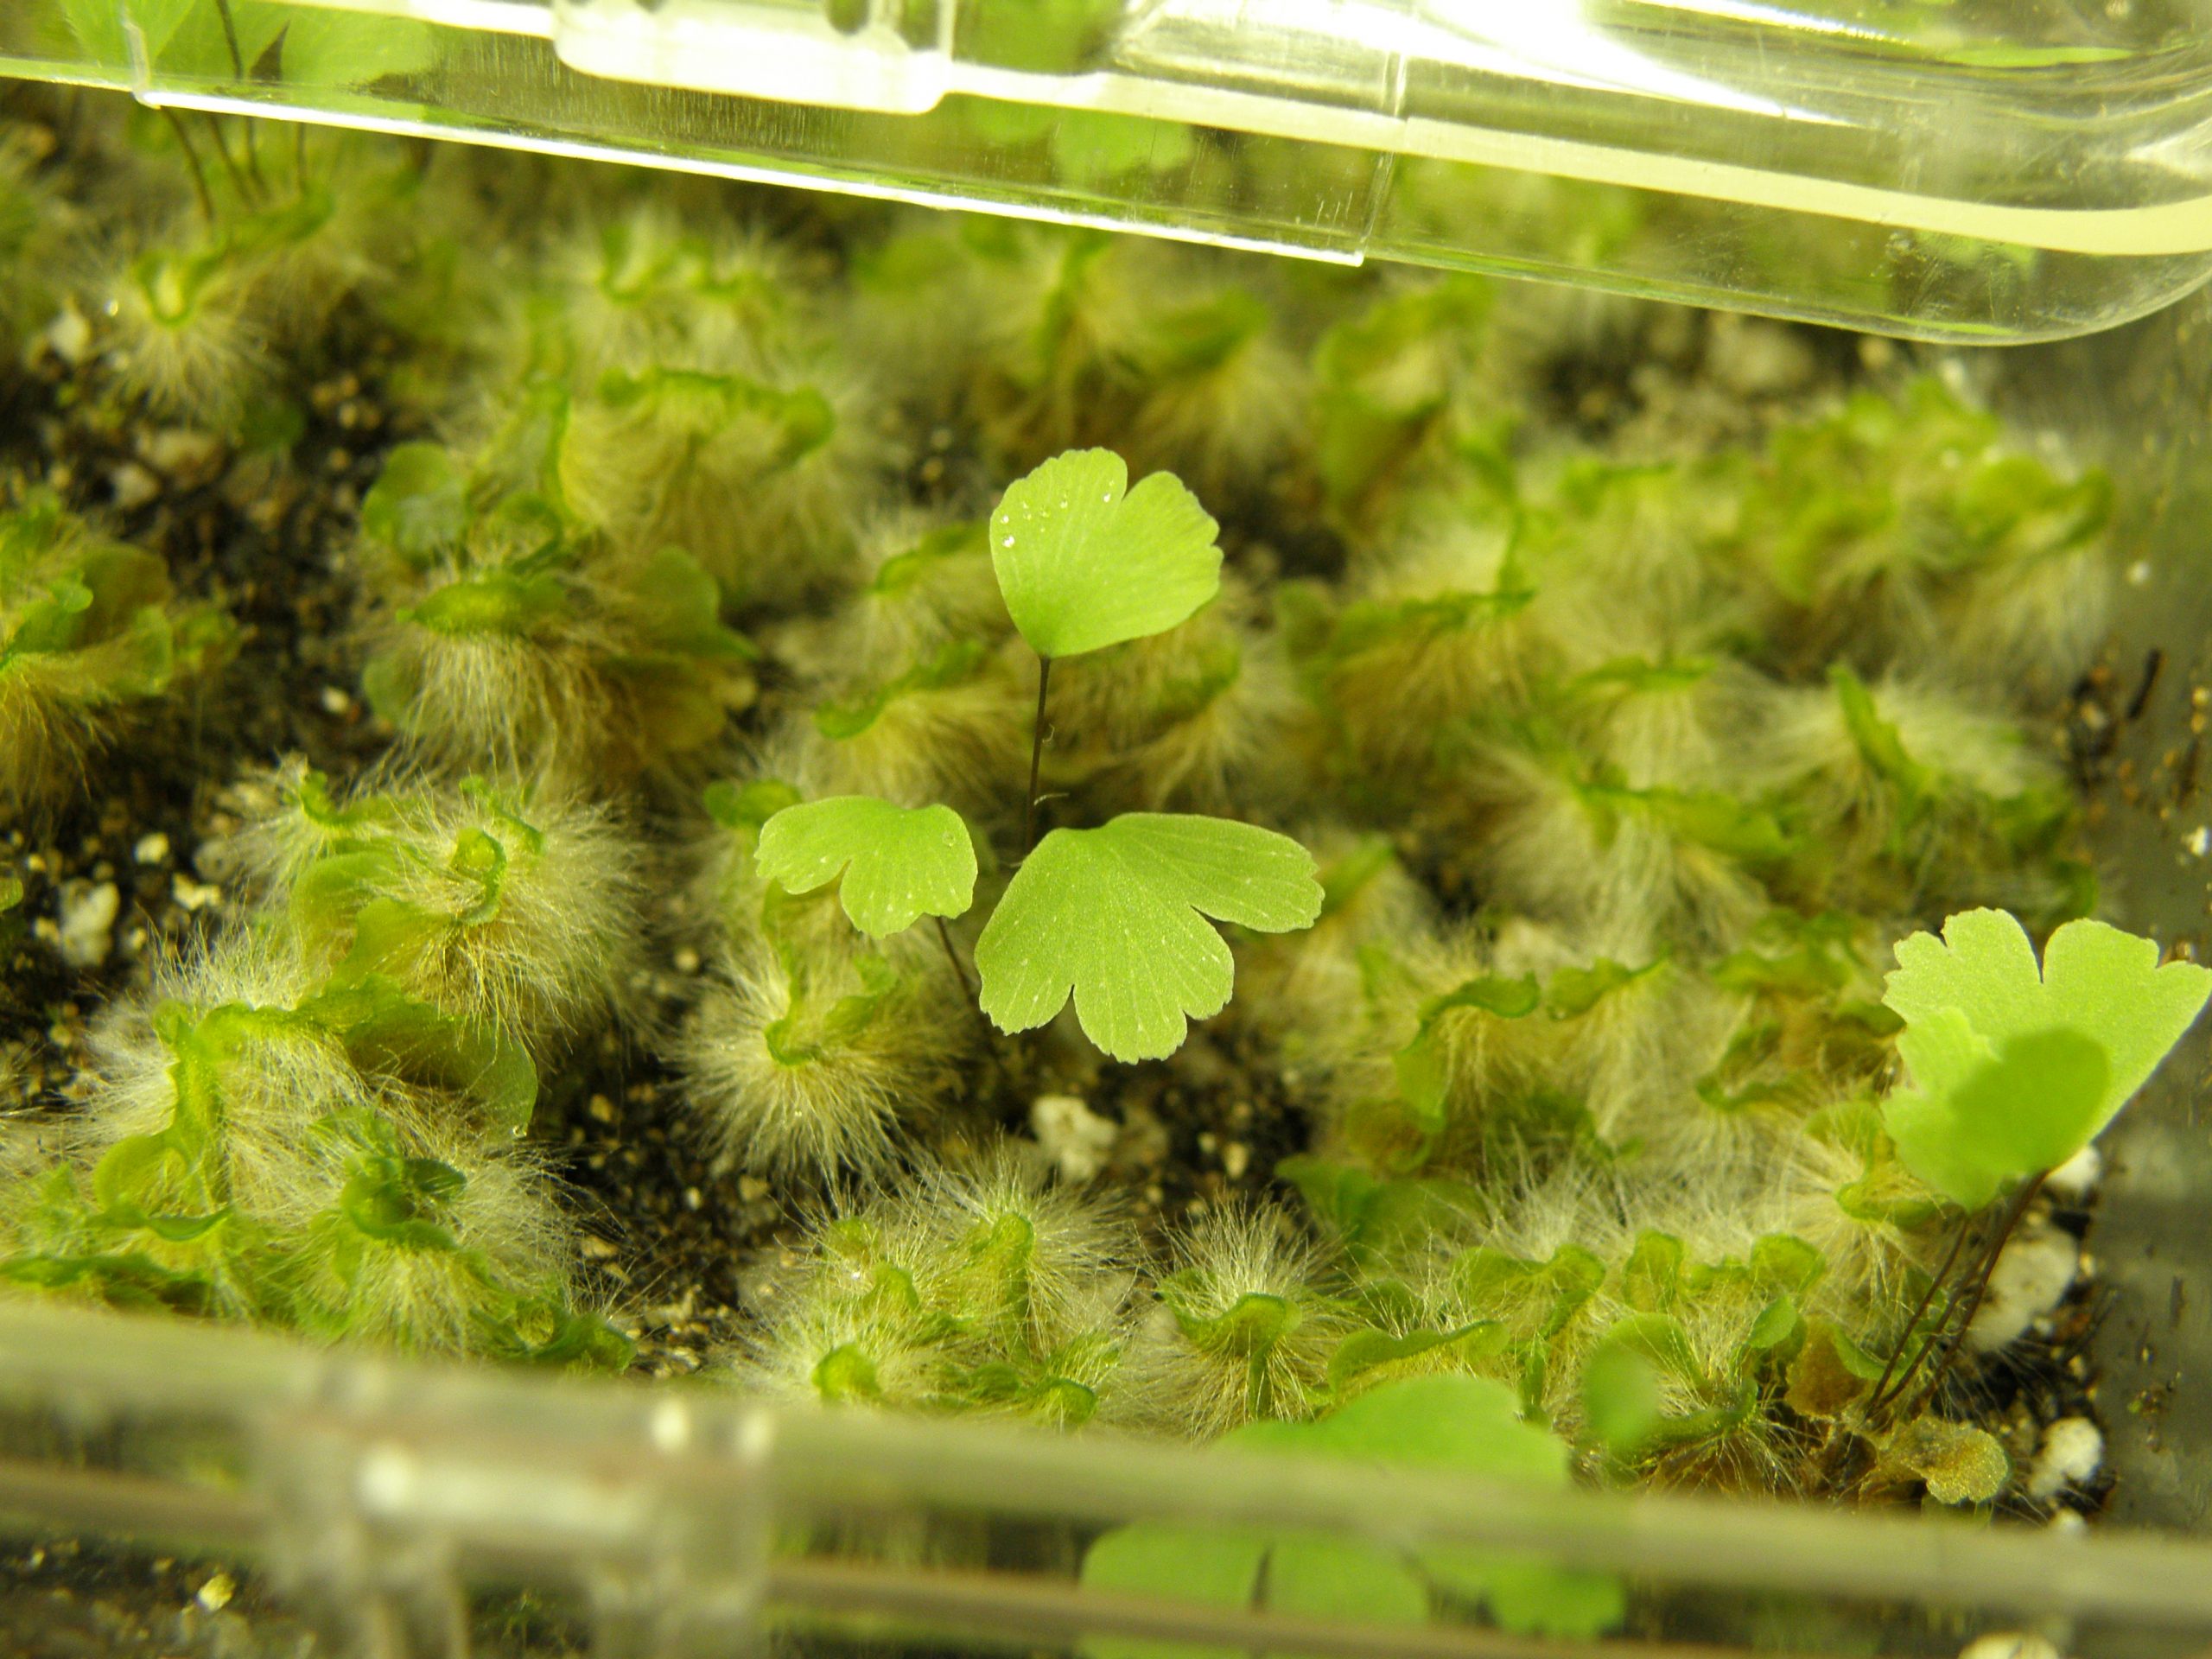 Silver dollar fern (Adiantum peruvianum) puts on vegetative growth while in a growth box.